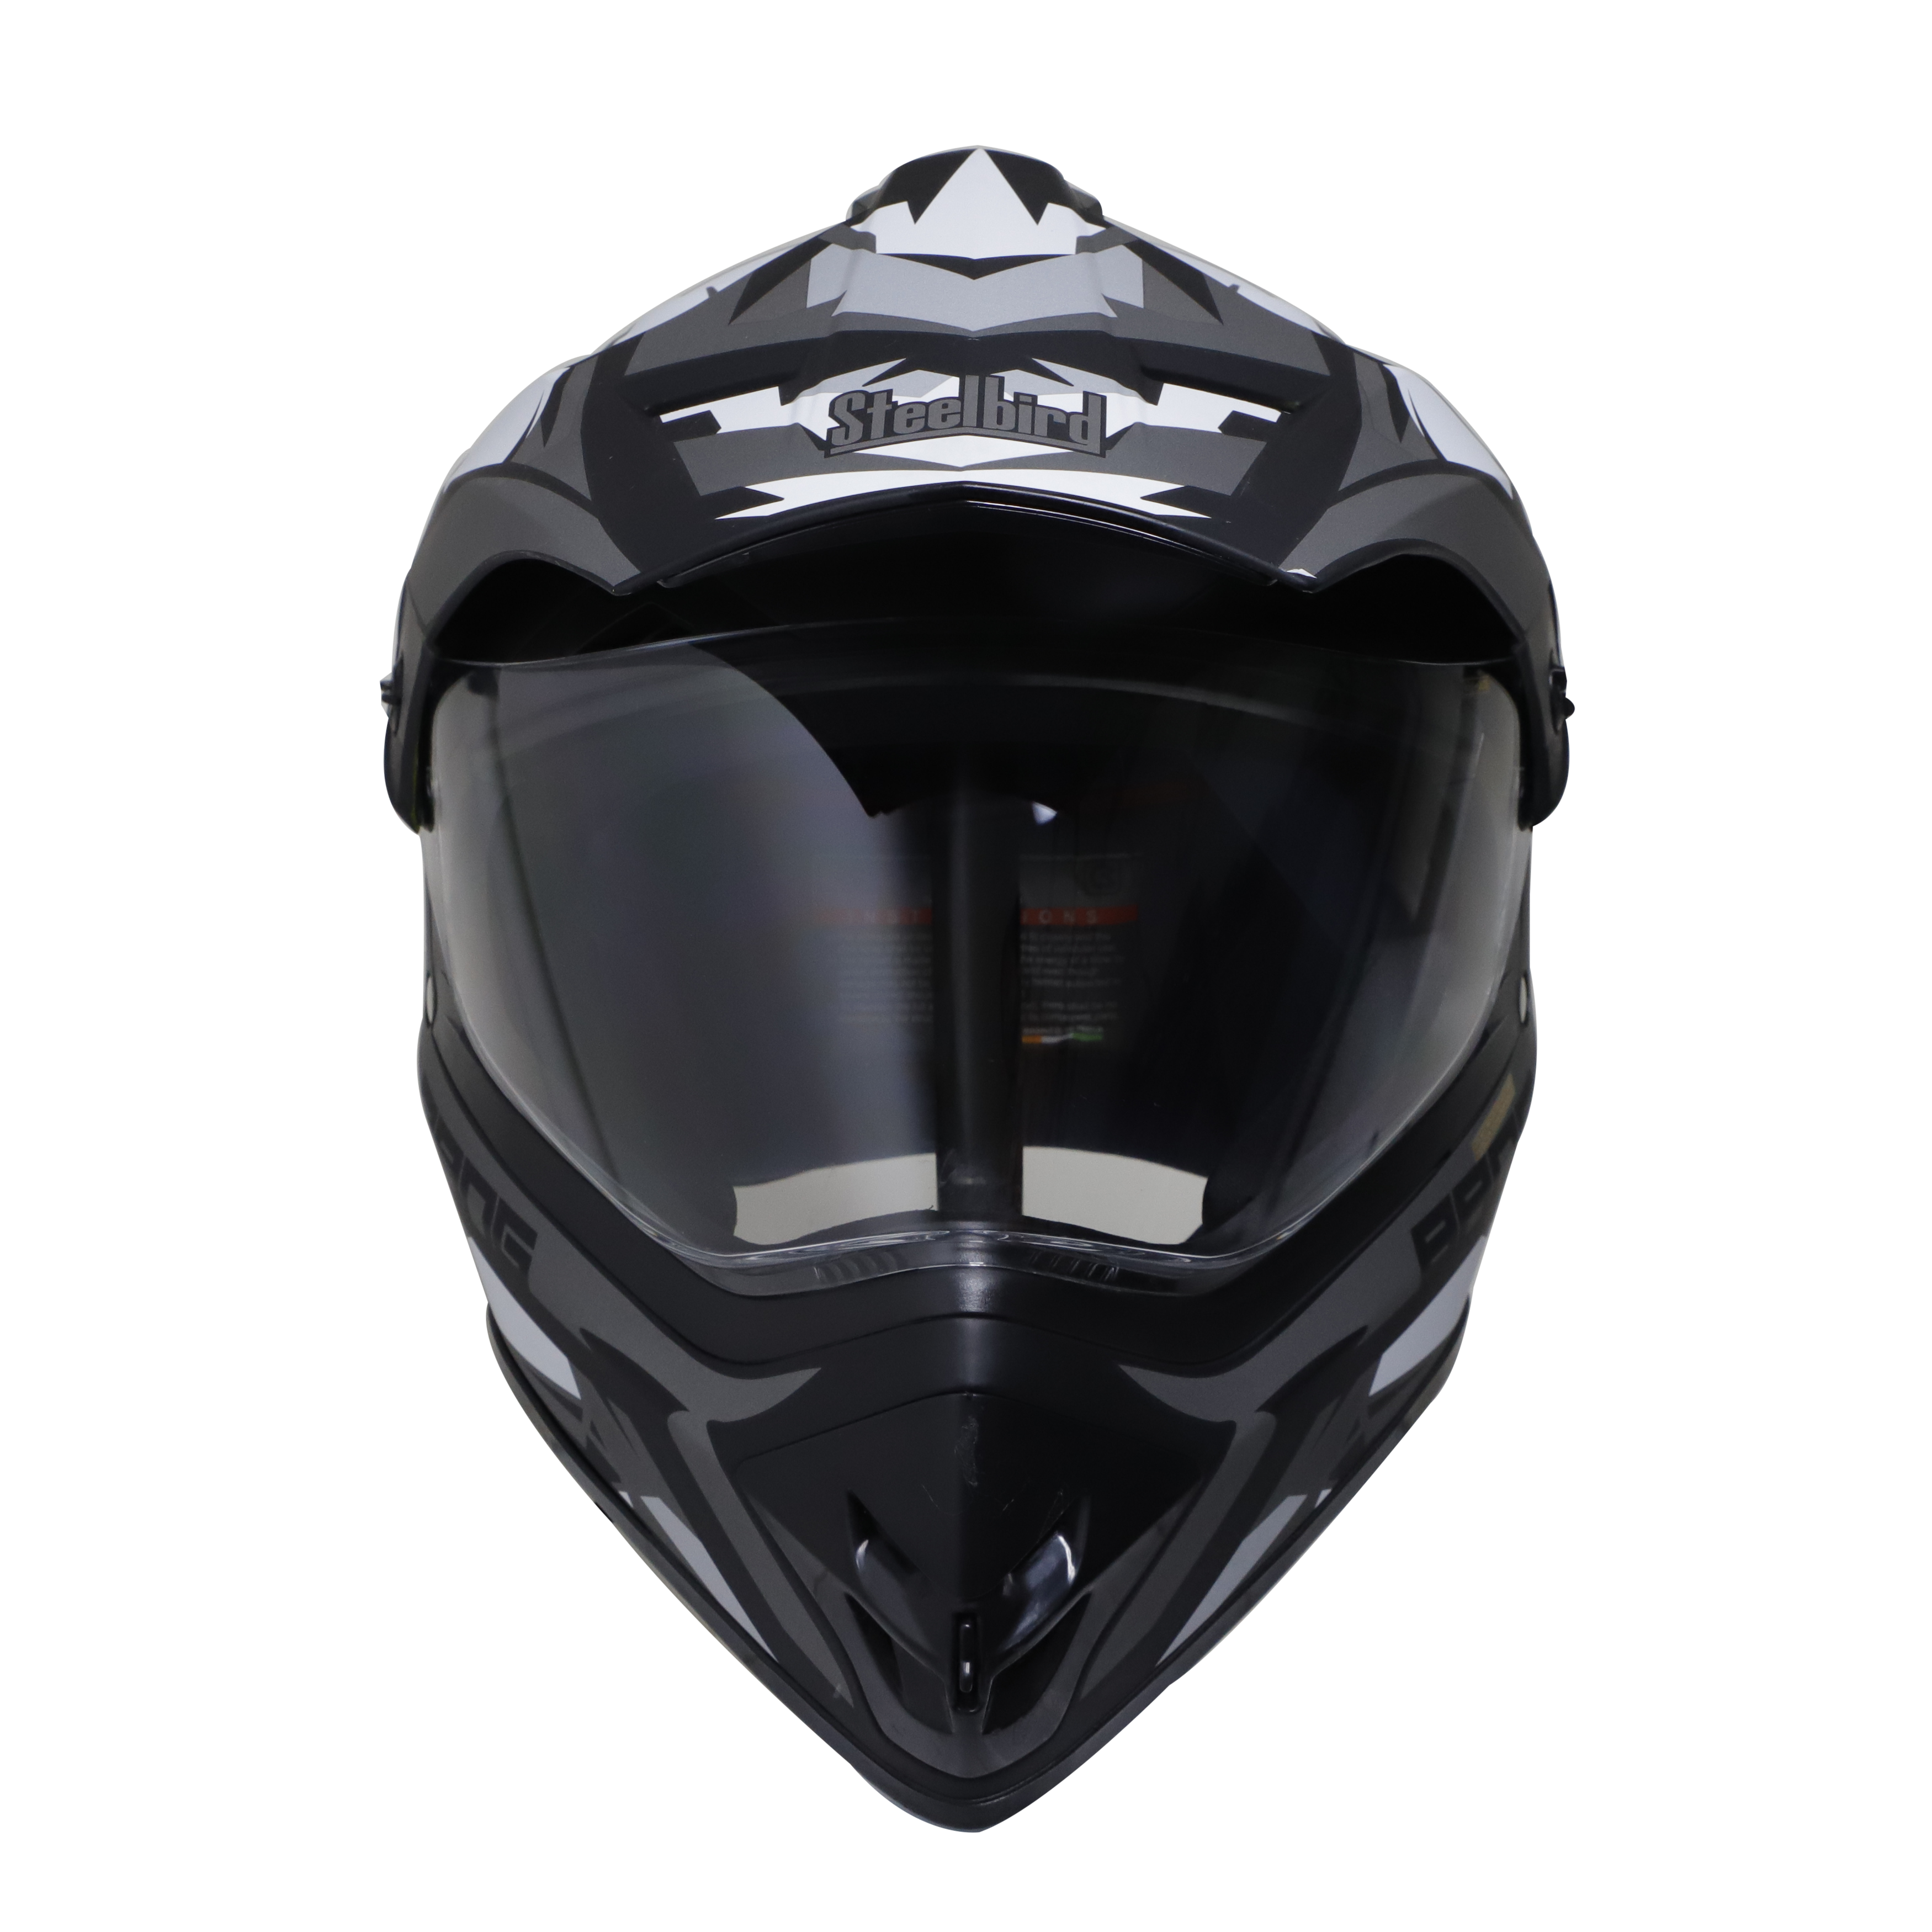 Steelbird Off Road Bang KTN ISI Certified ABS Material Shell Motocross Helmet (Matt Black Grey With Clear Visor)